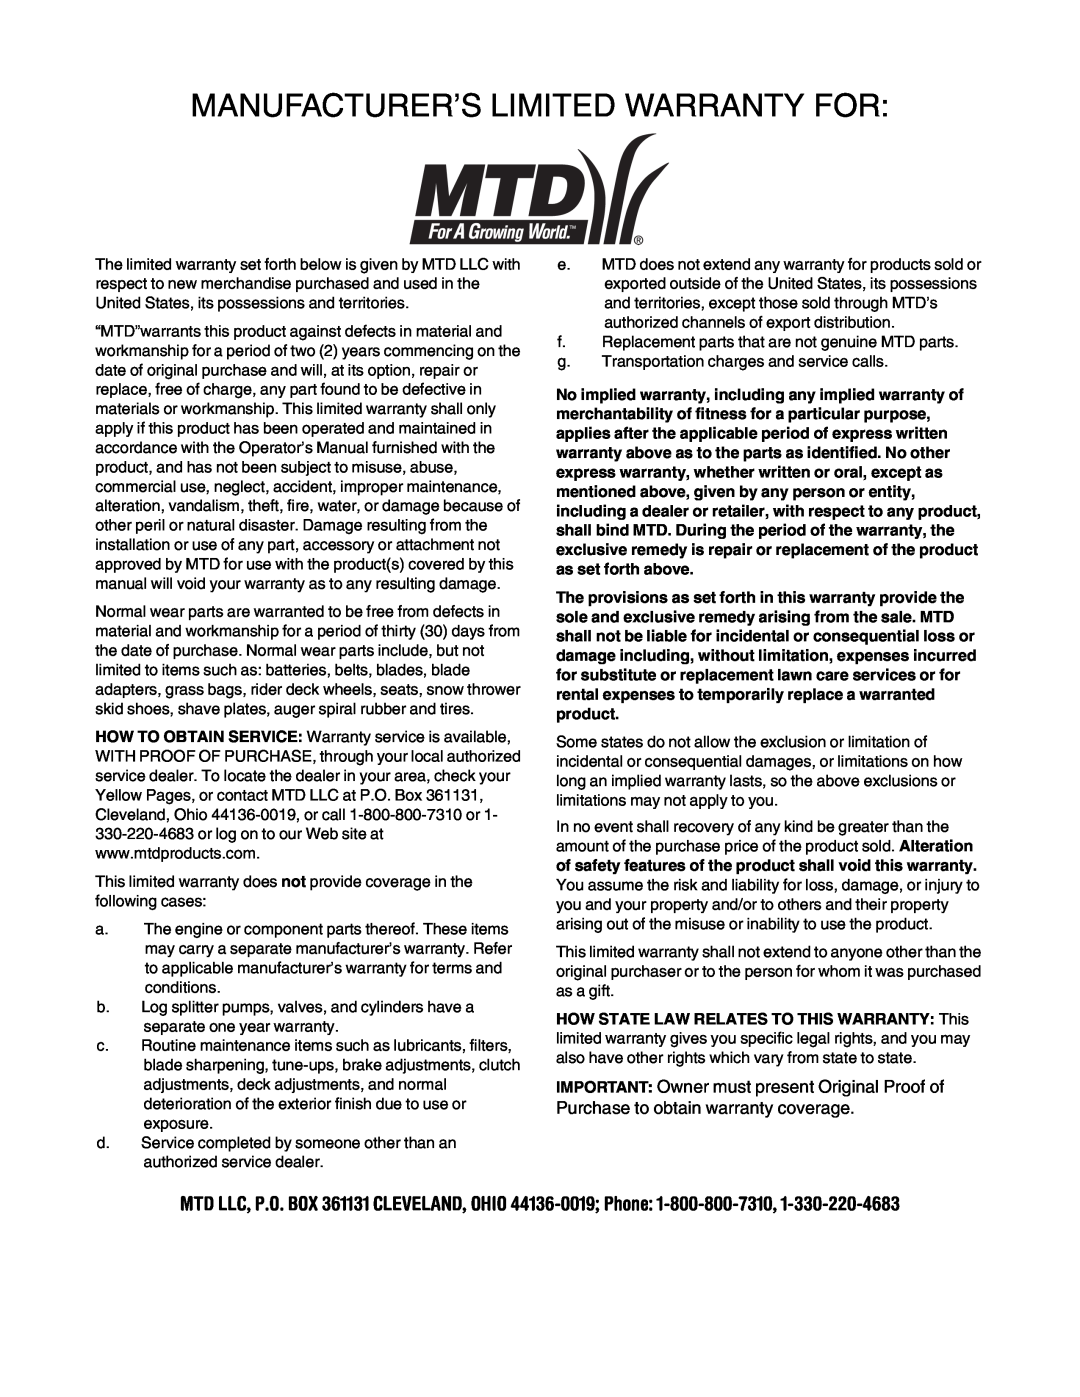 MTD 428C manual Manufacturer’S Limited Warranty For 